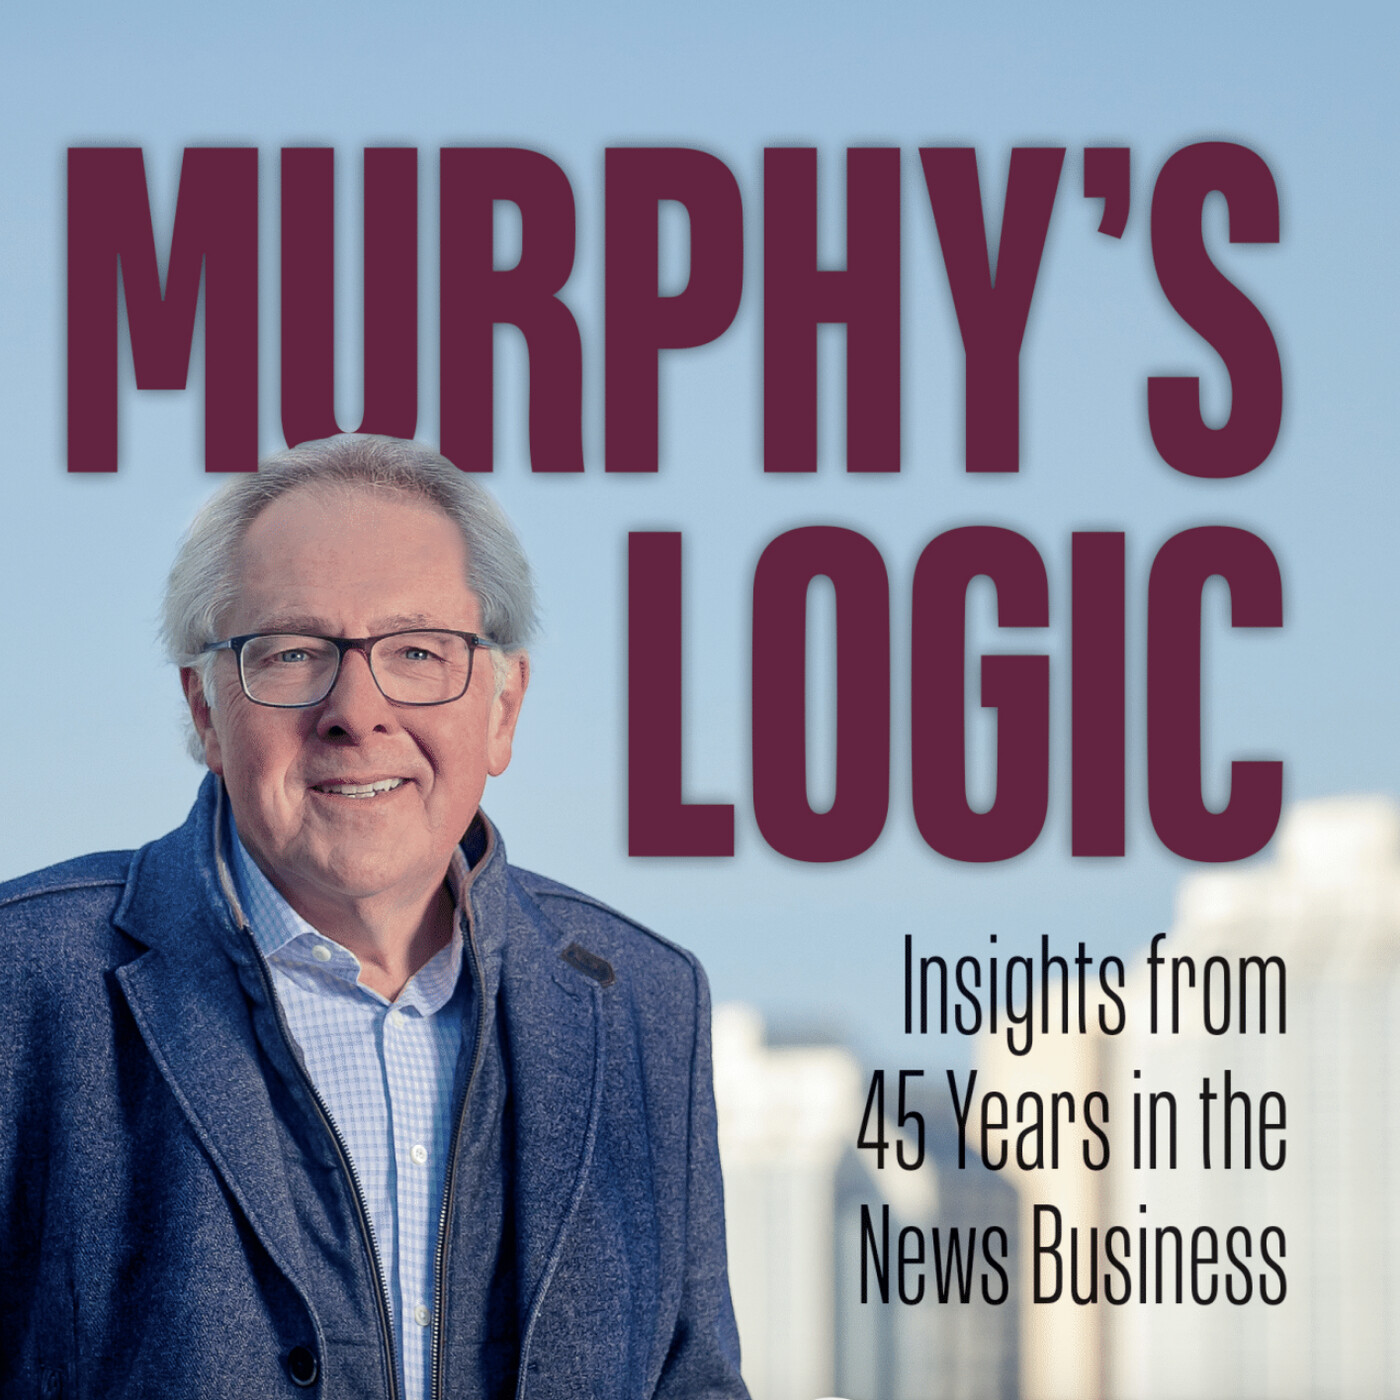 Steve Murphy on ’Murphy’s Logic’ and 45 years in news